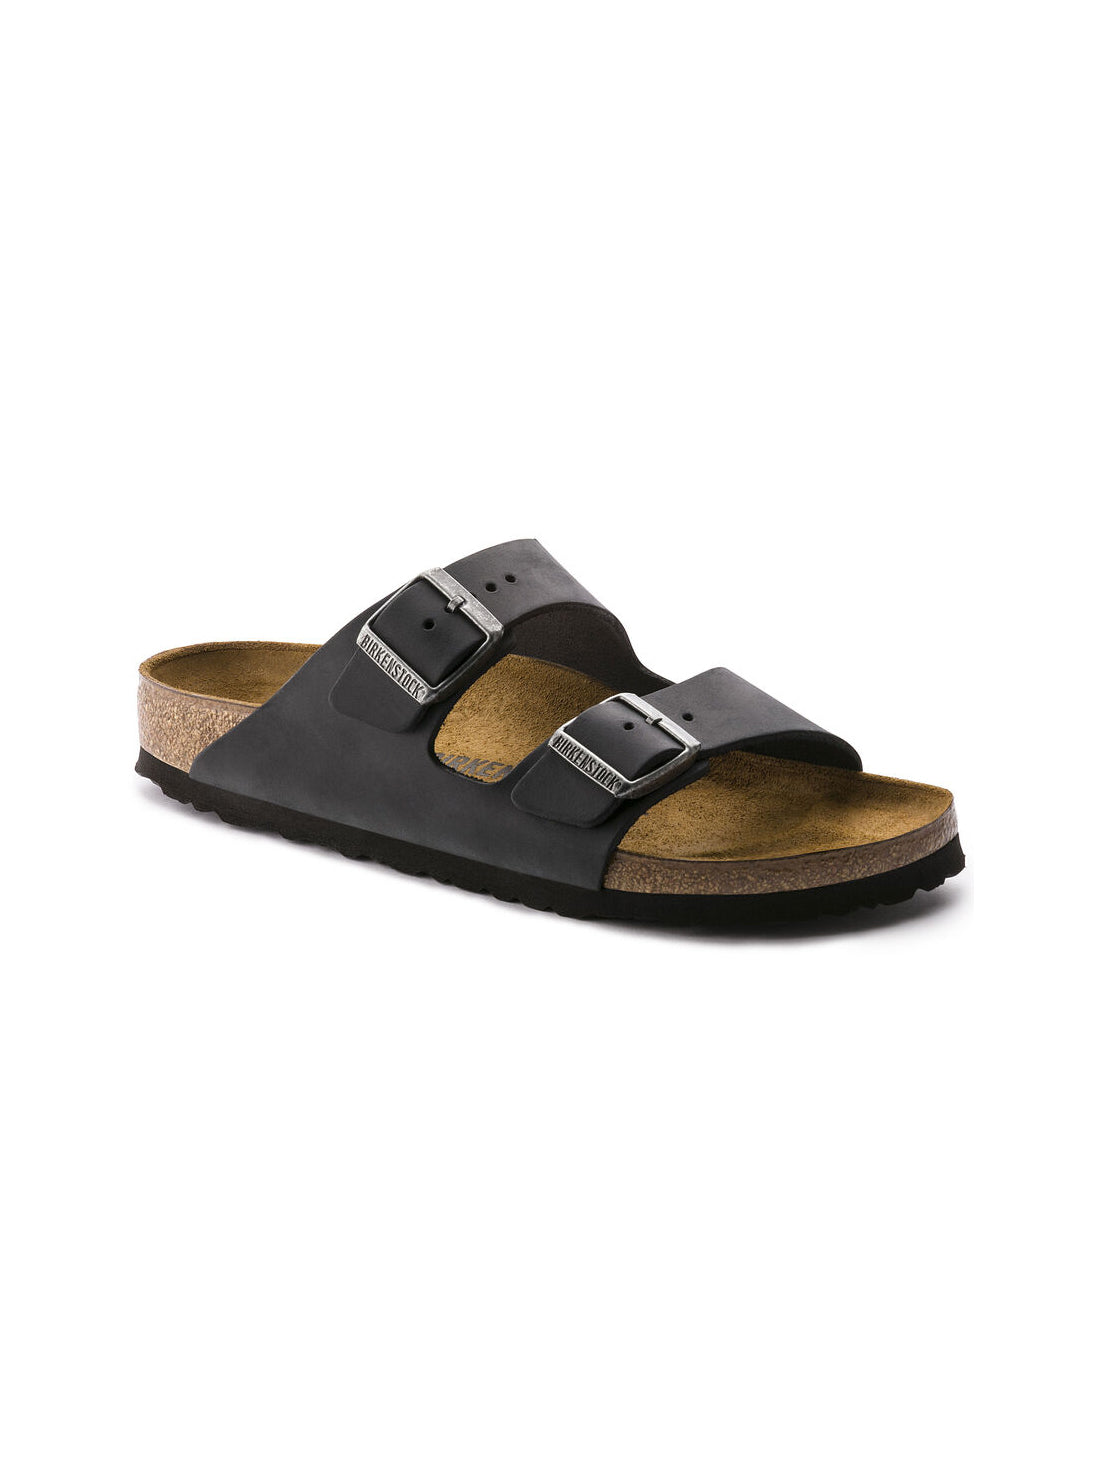 birkenstock arizona sandal in black oiled leather regular